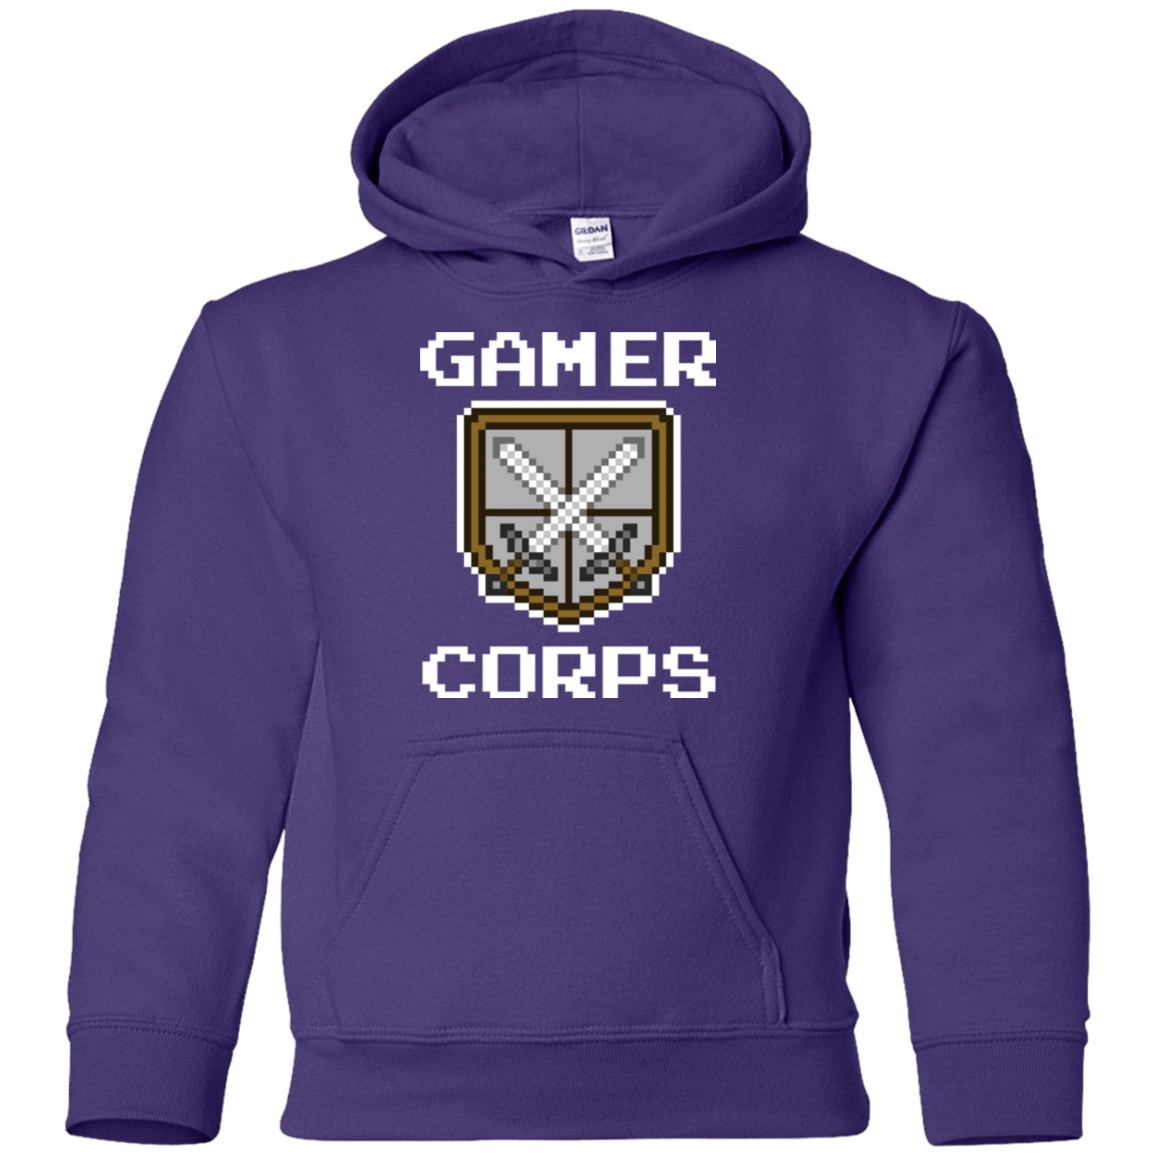 Sweatshirts Purple / YS Gamer corps Youth Hoodie